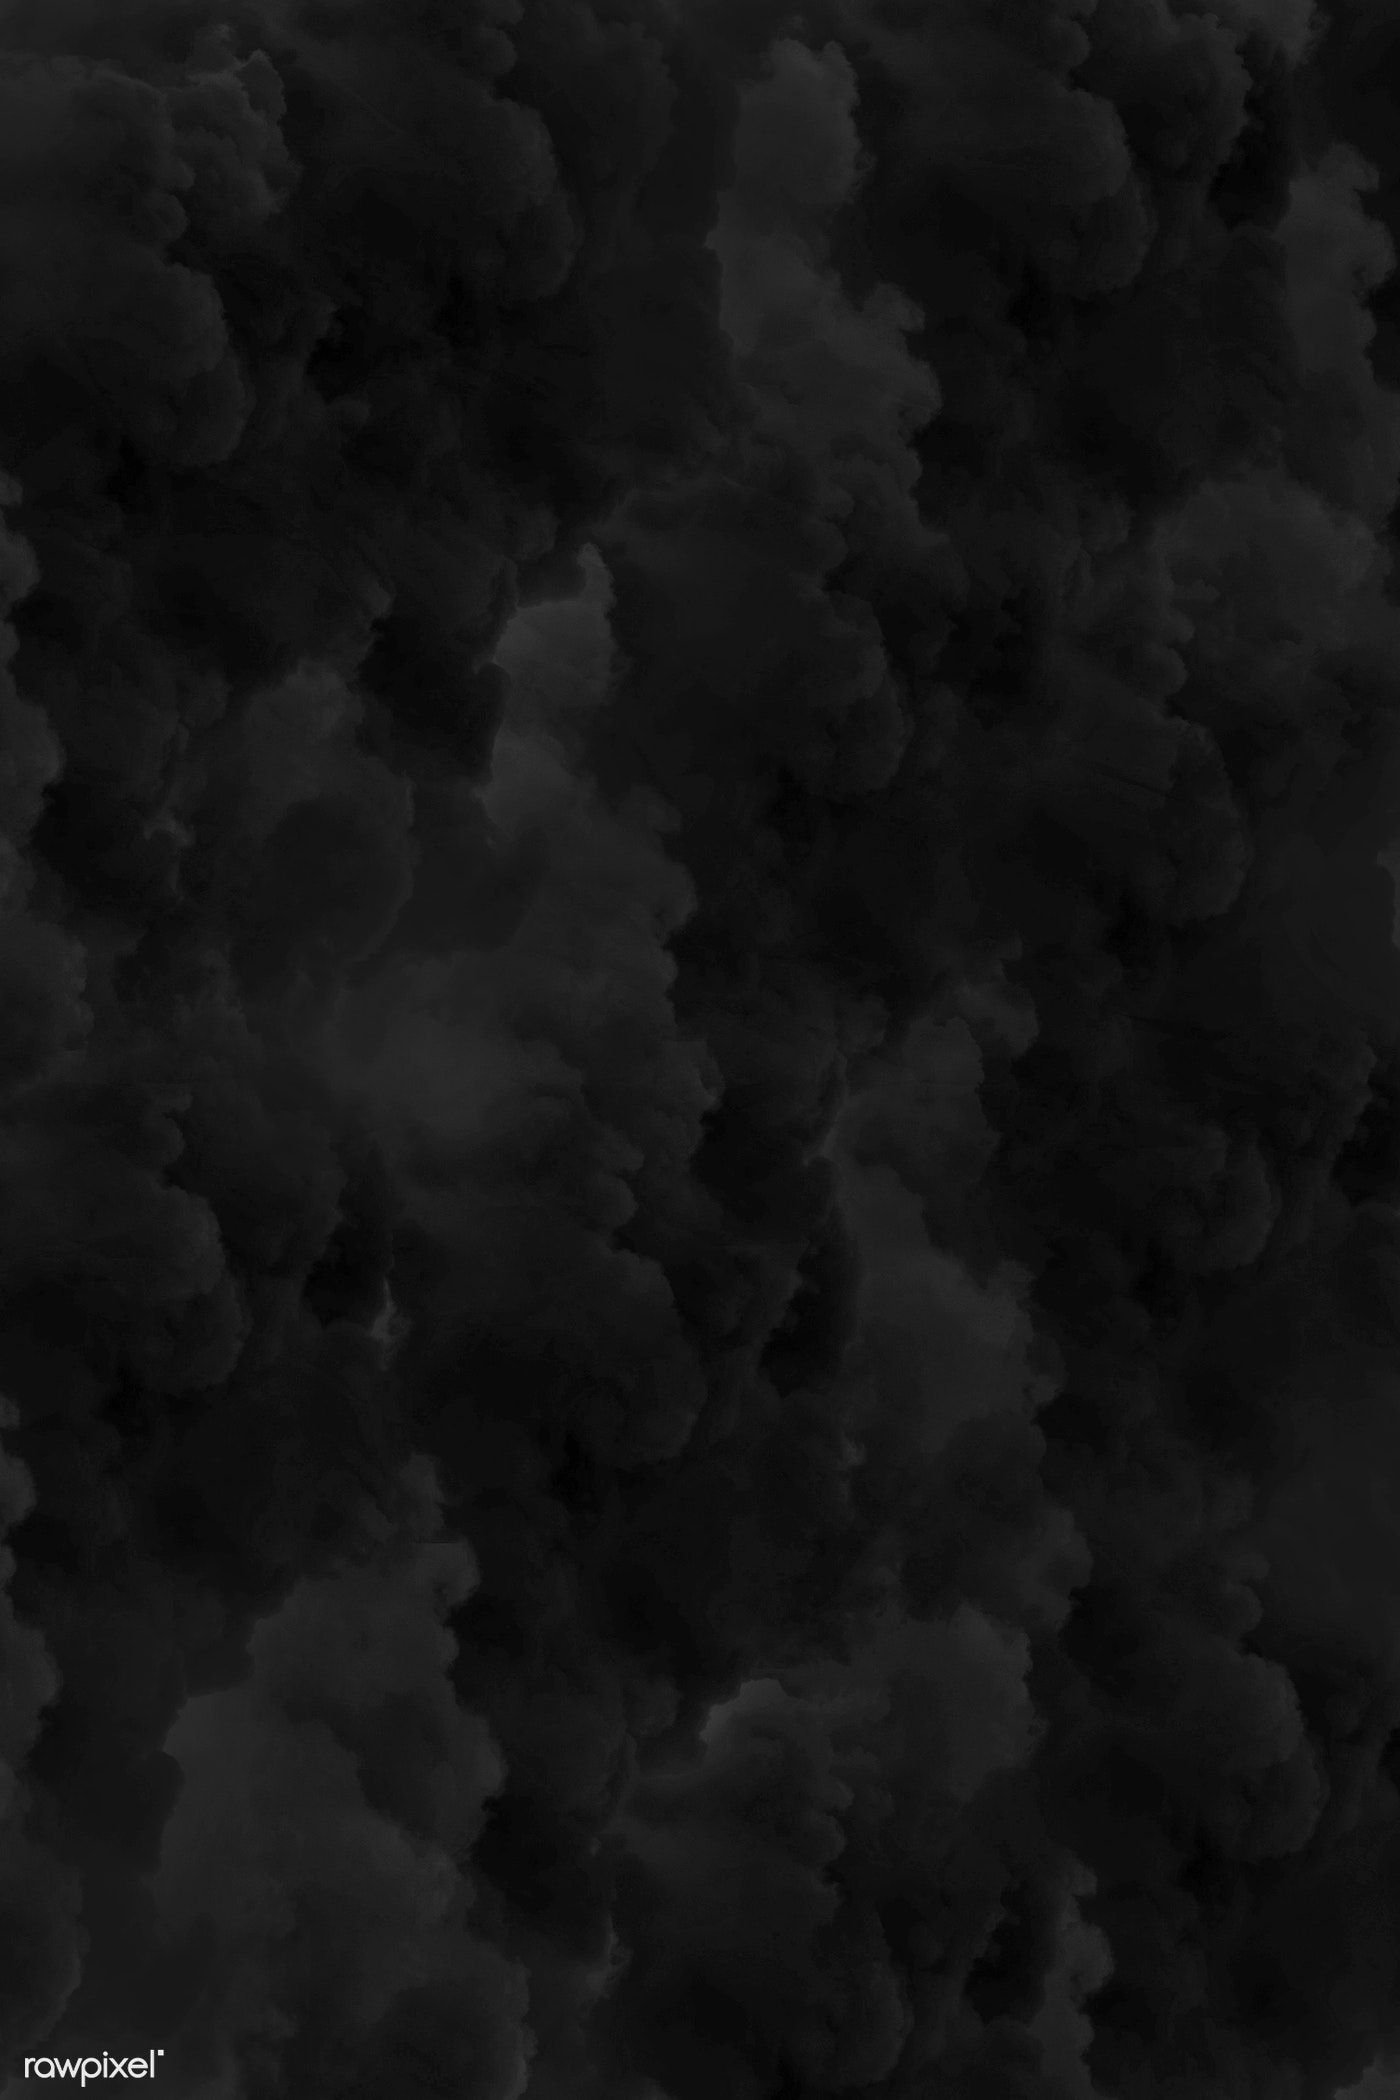 Black cloud patterned background. free image / katie. Black and white clouds, Clouds, Black clouds